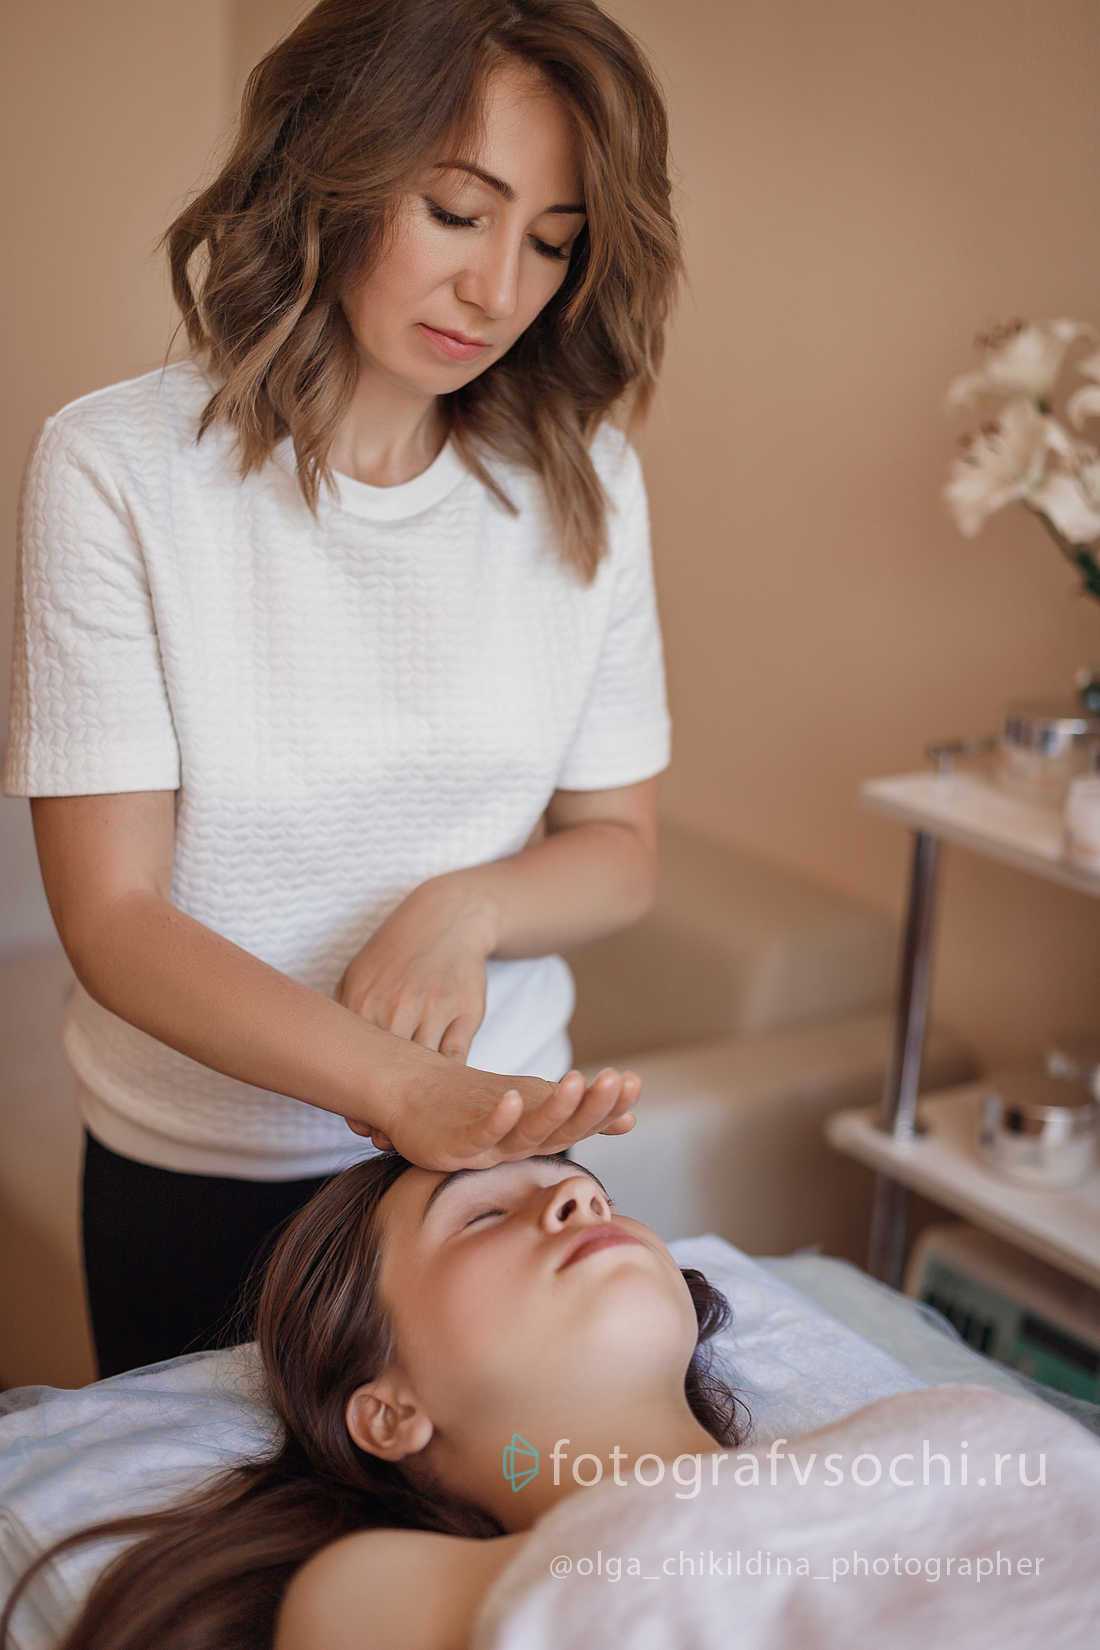 Женщина делает массаж лица пациентке